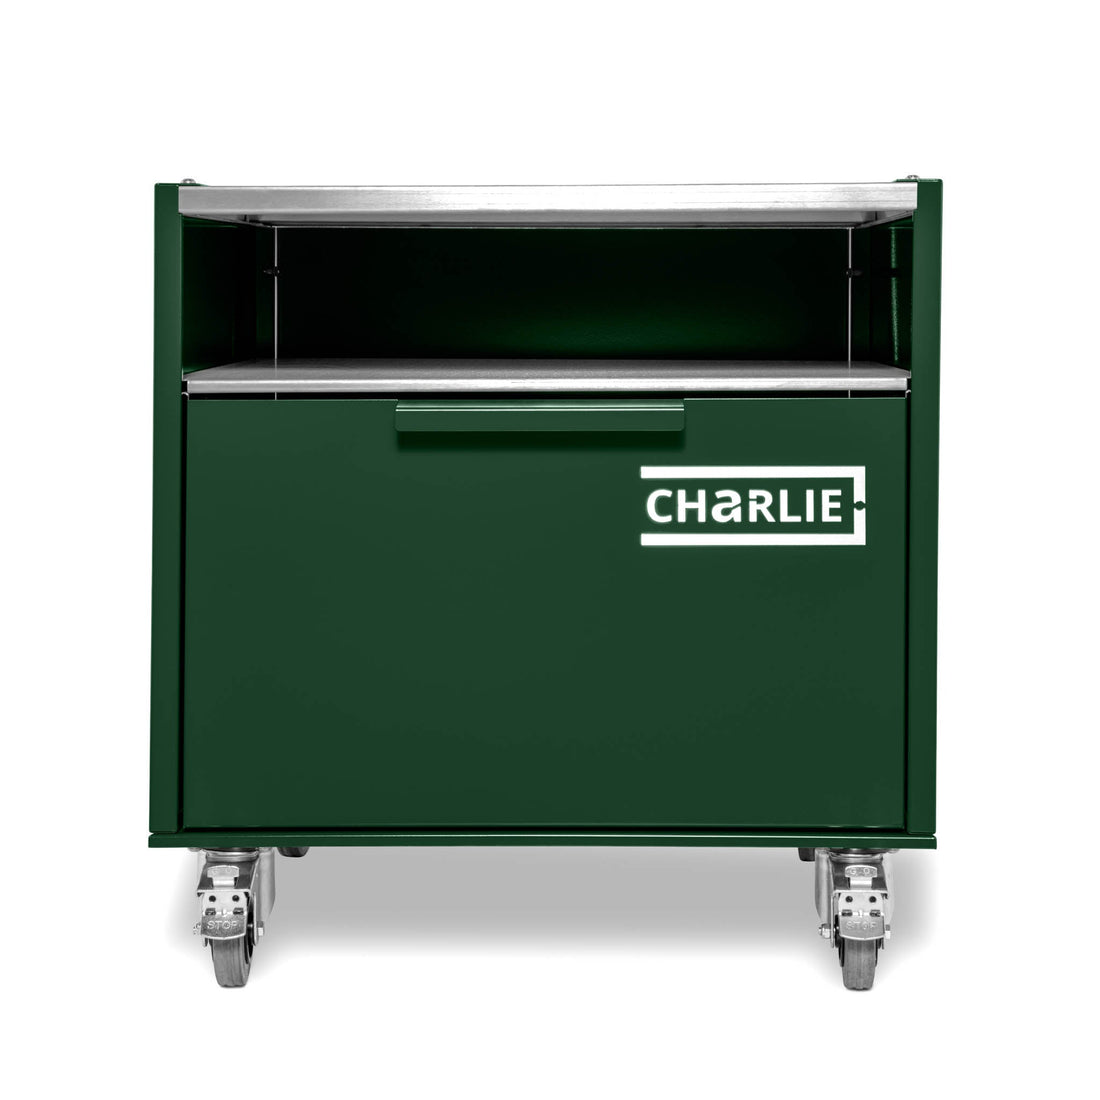 Charlie Base Cabinet - Green Chilli - Charlie Oven